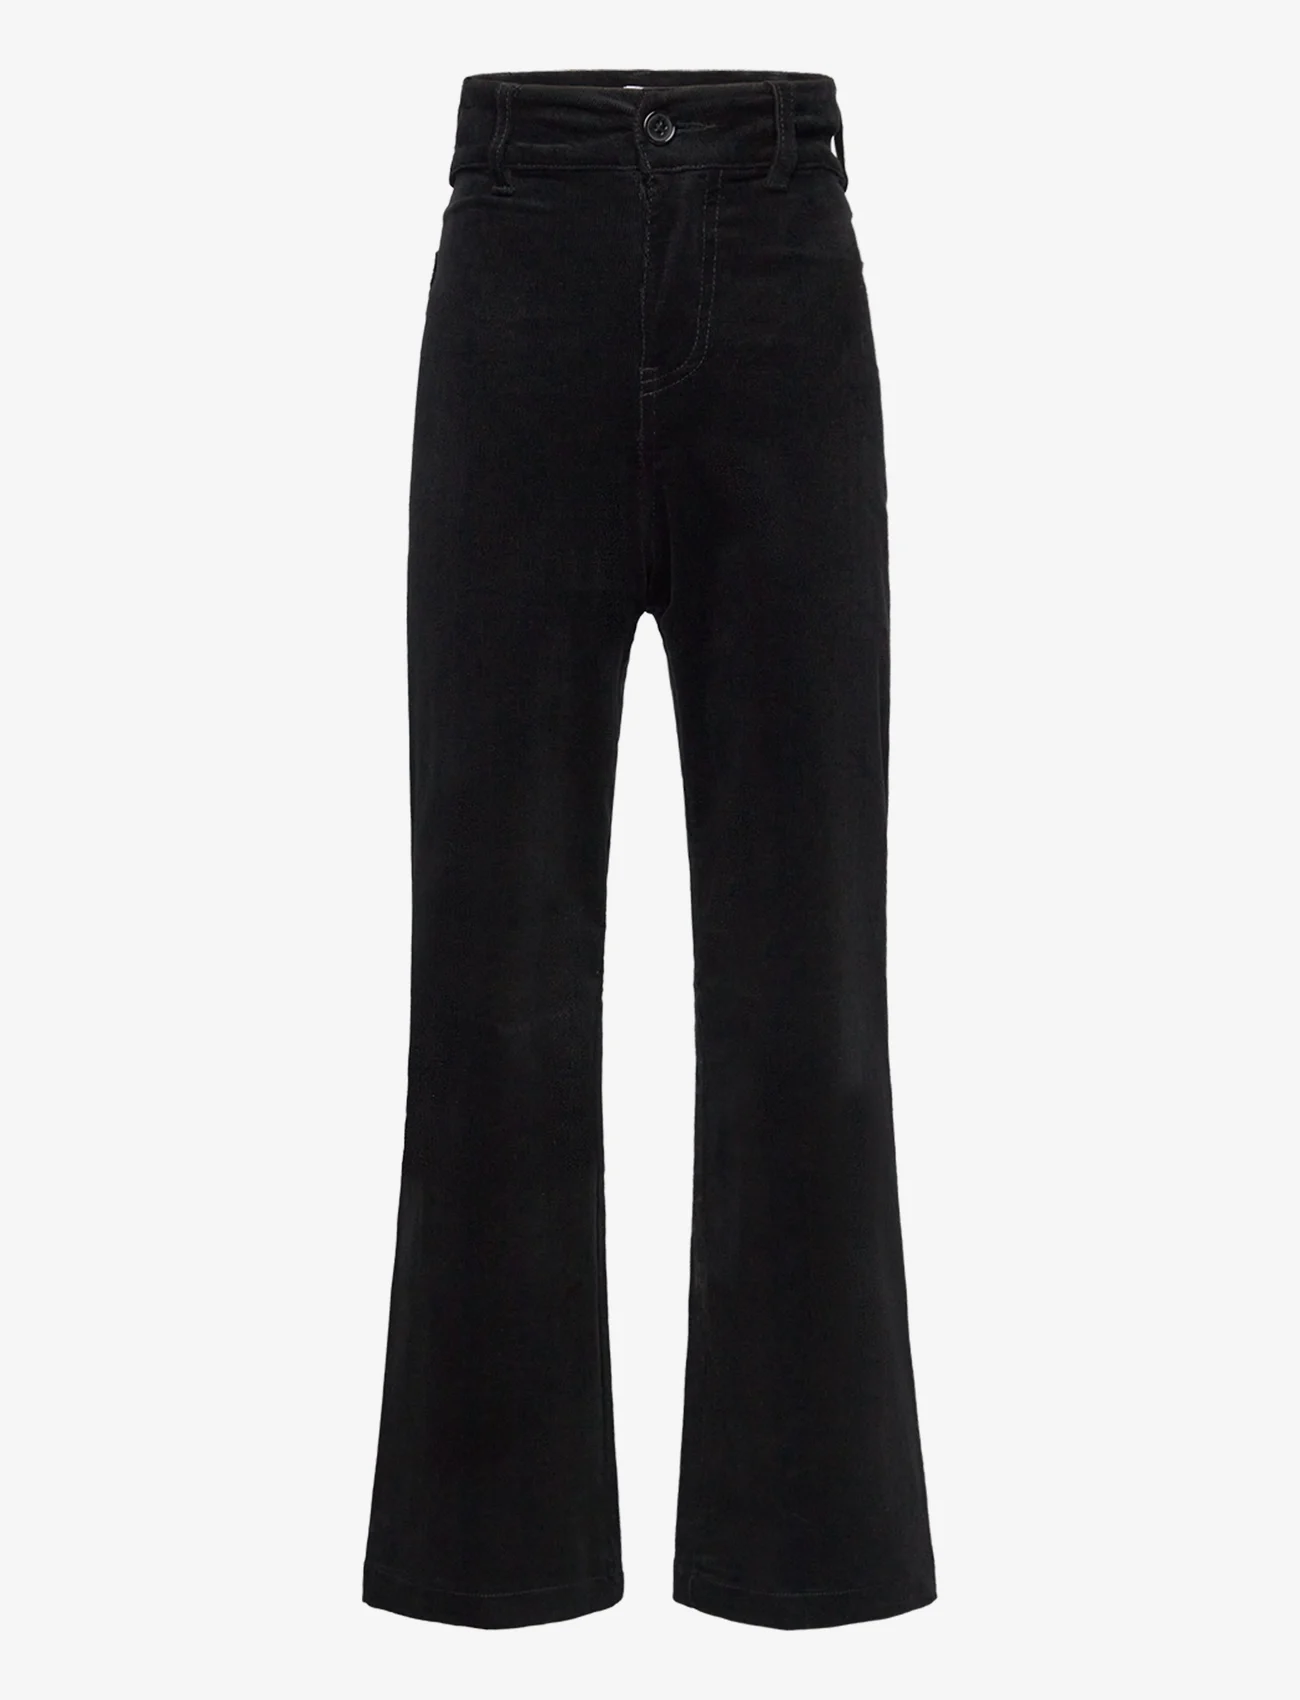 Grunt - Wise Wide Corderoy - trousers - black - 0